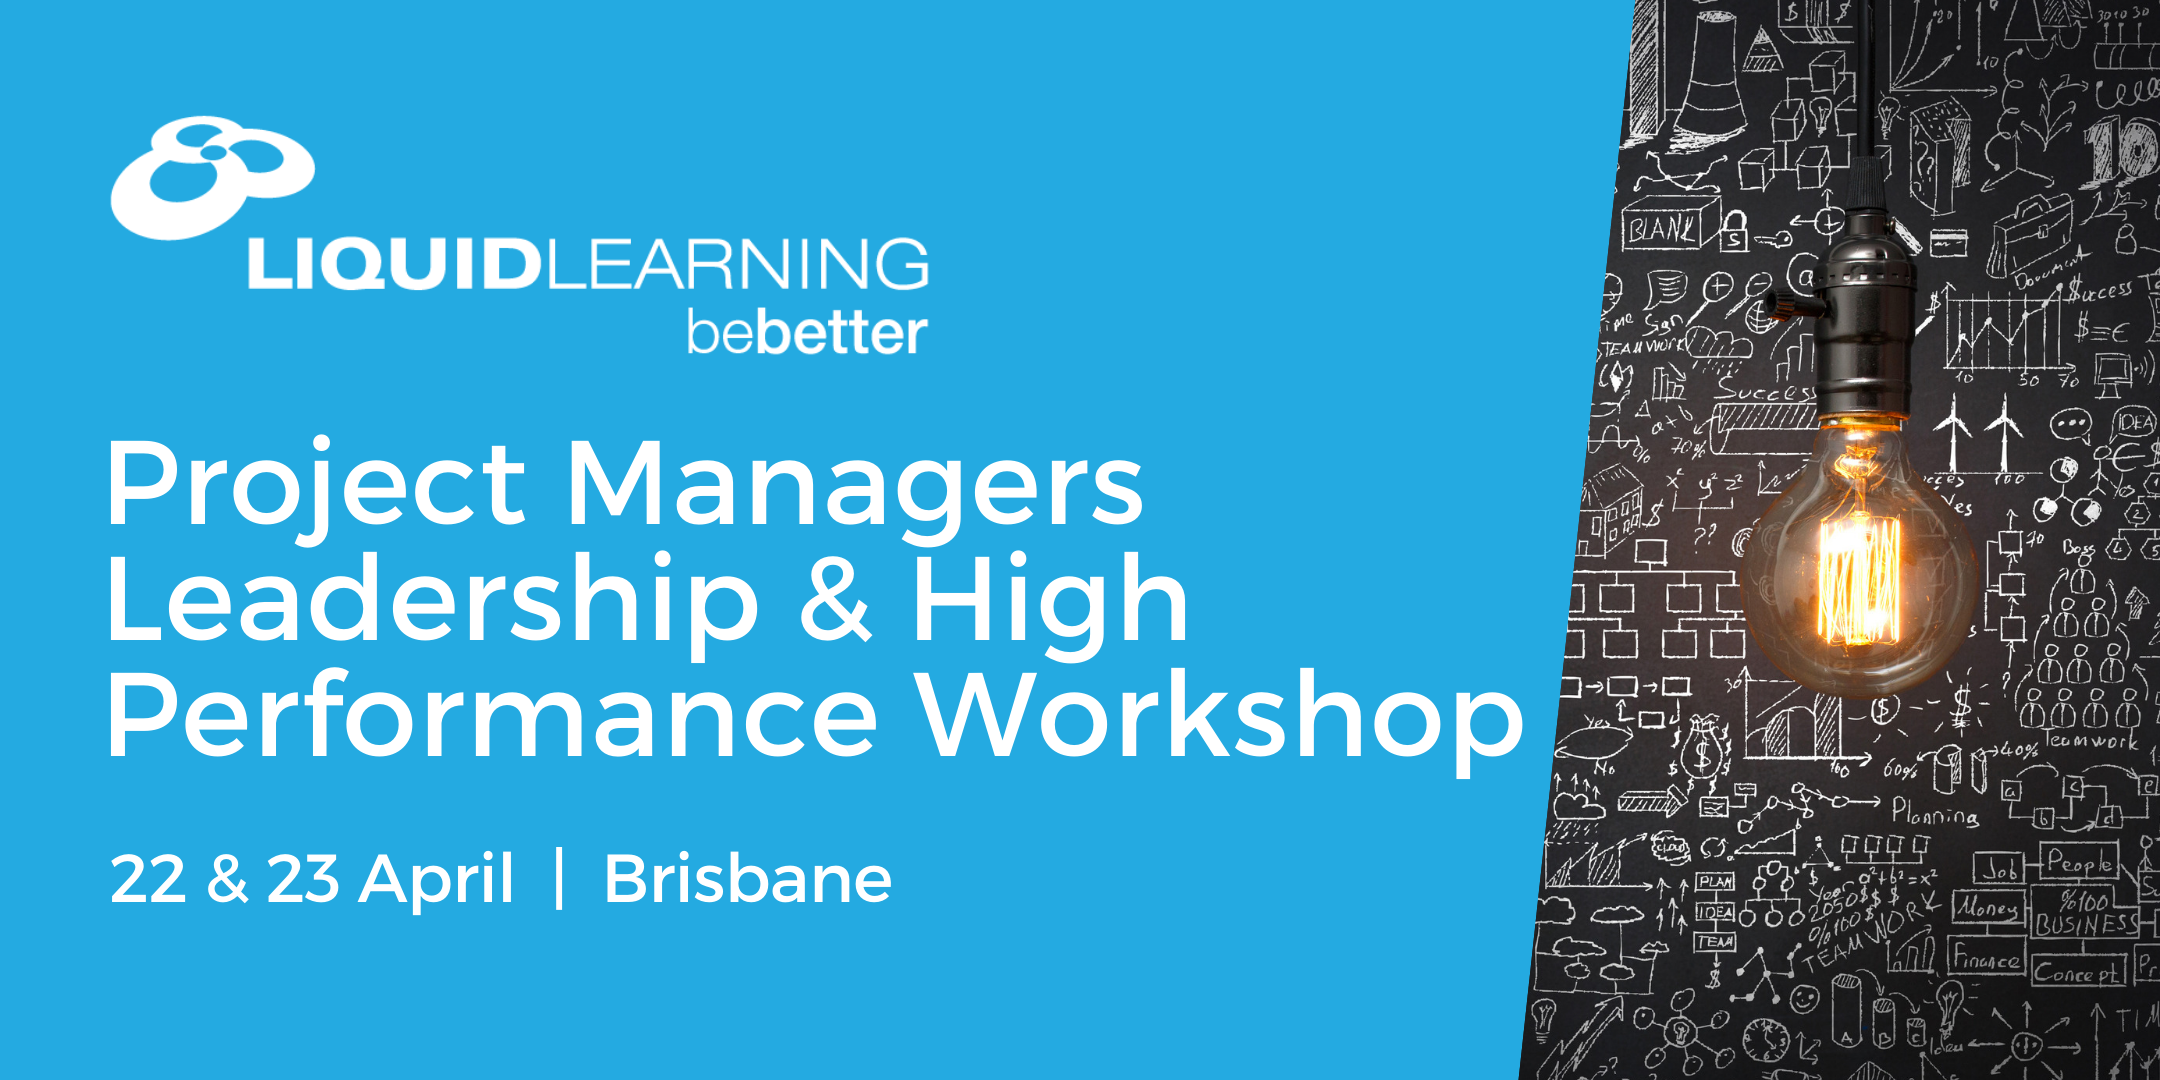 Project Managers Leadership & High Performance Workshop Brisbane